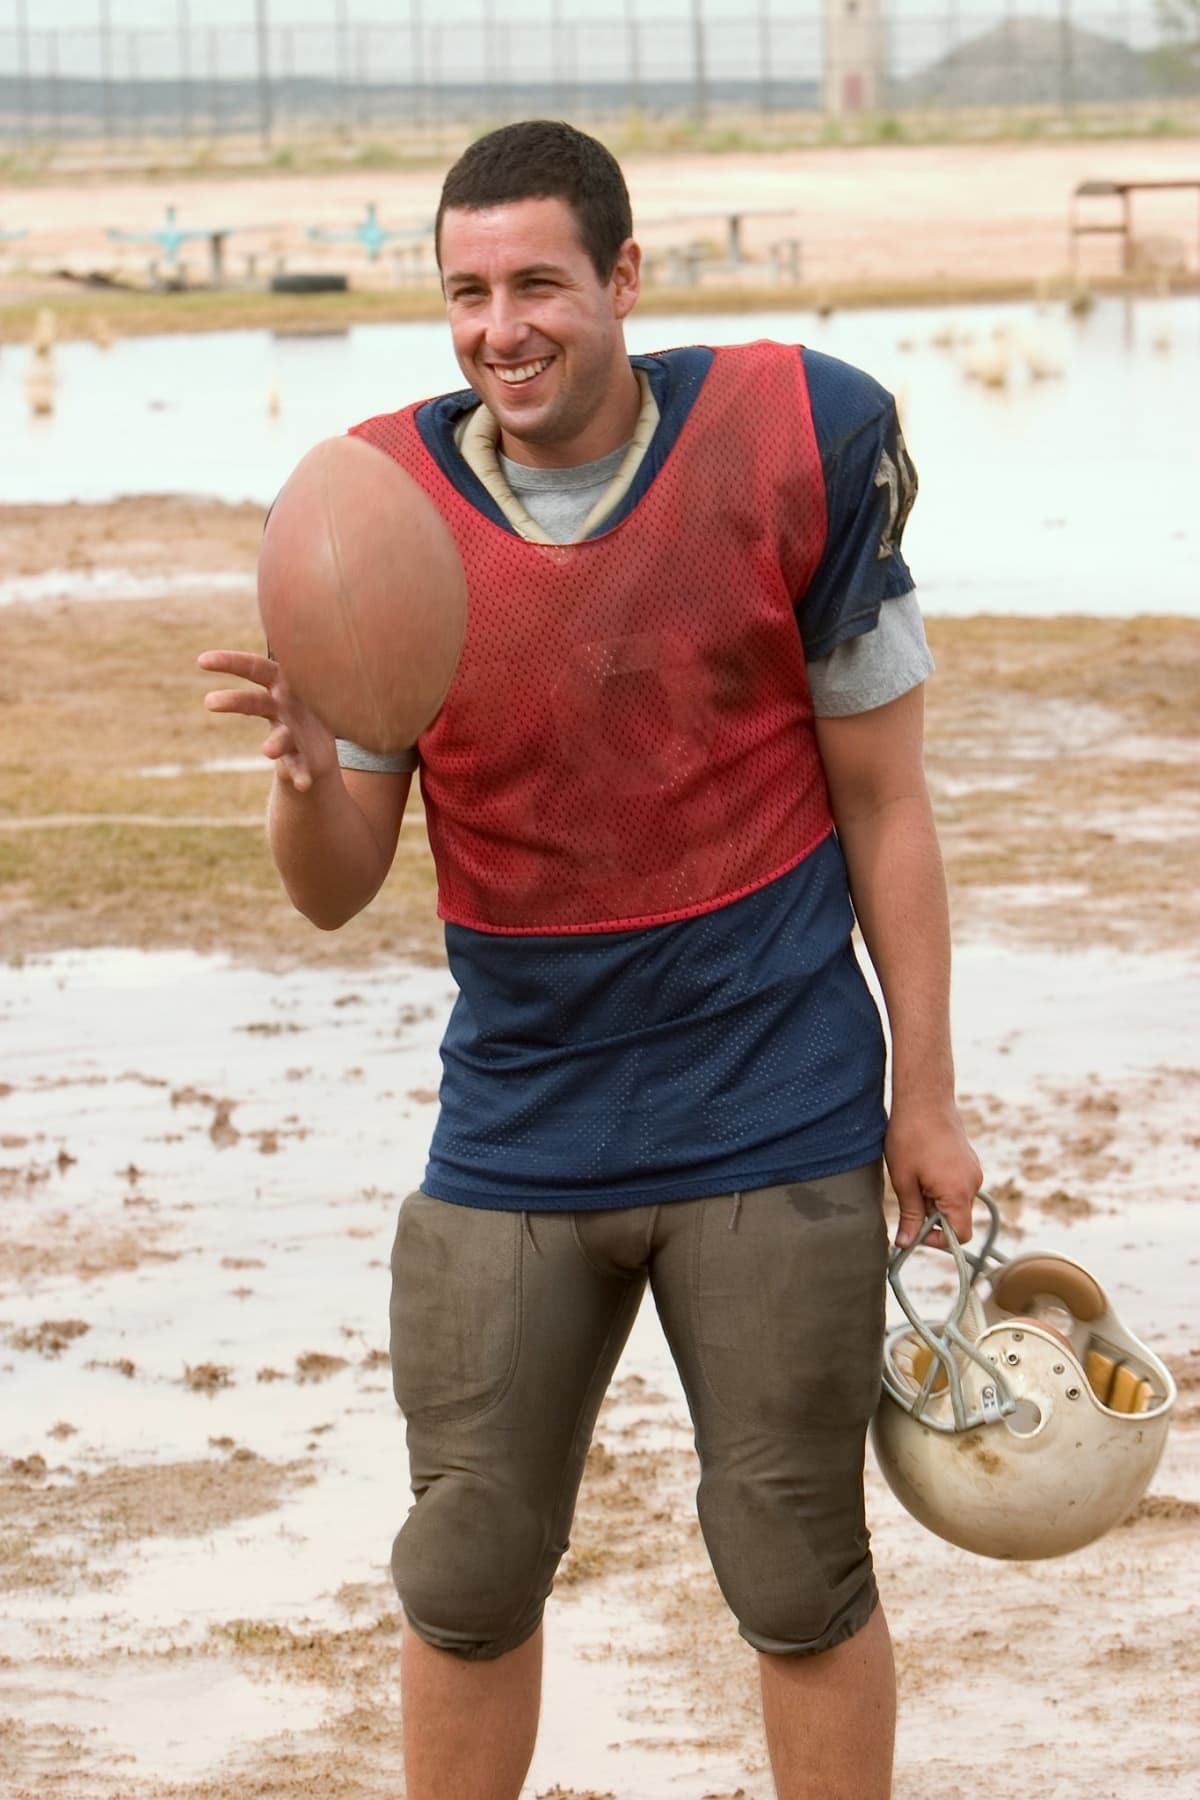 Adam Sandler as Paul Crewe in the 2005 sports comedy film The Longest Yard